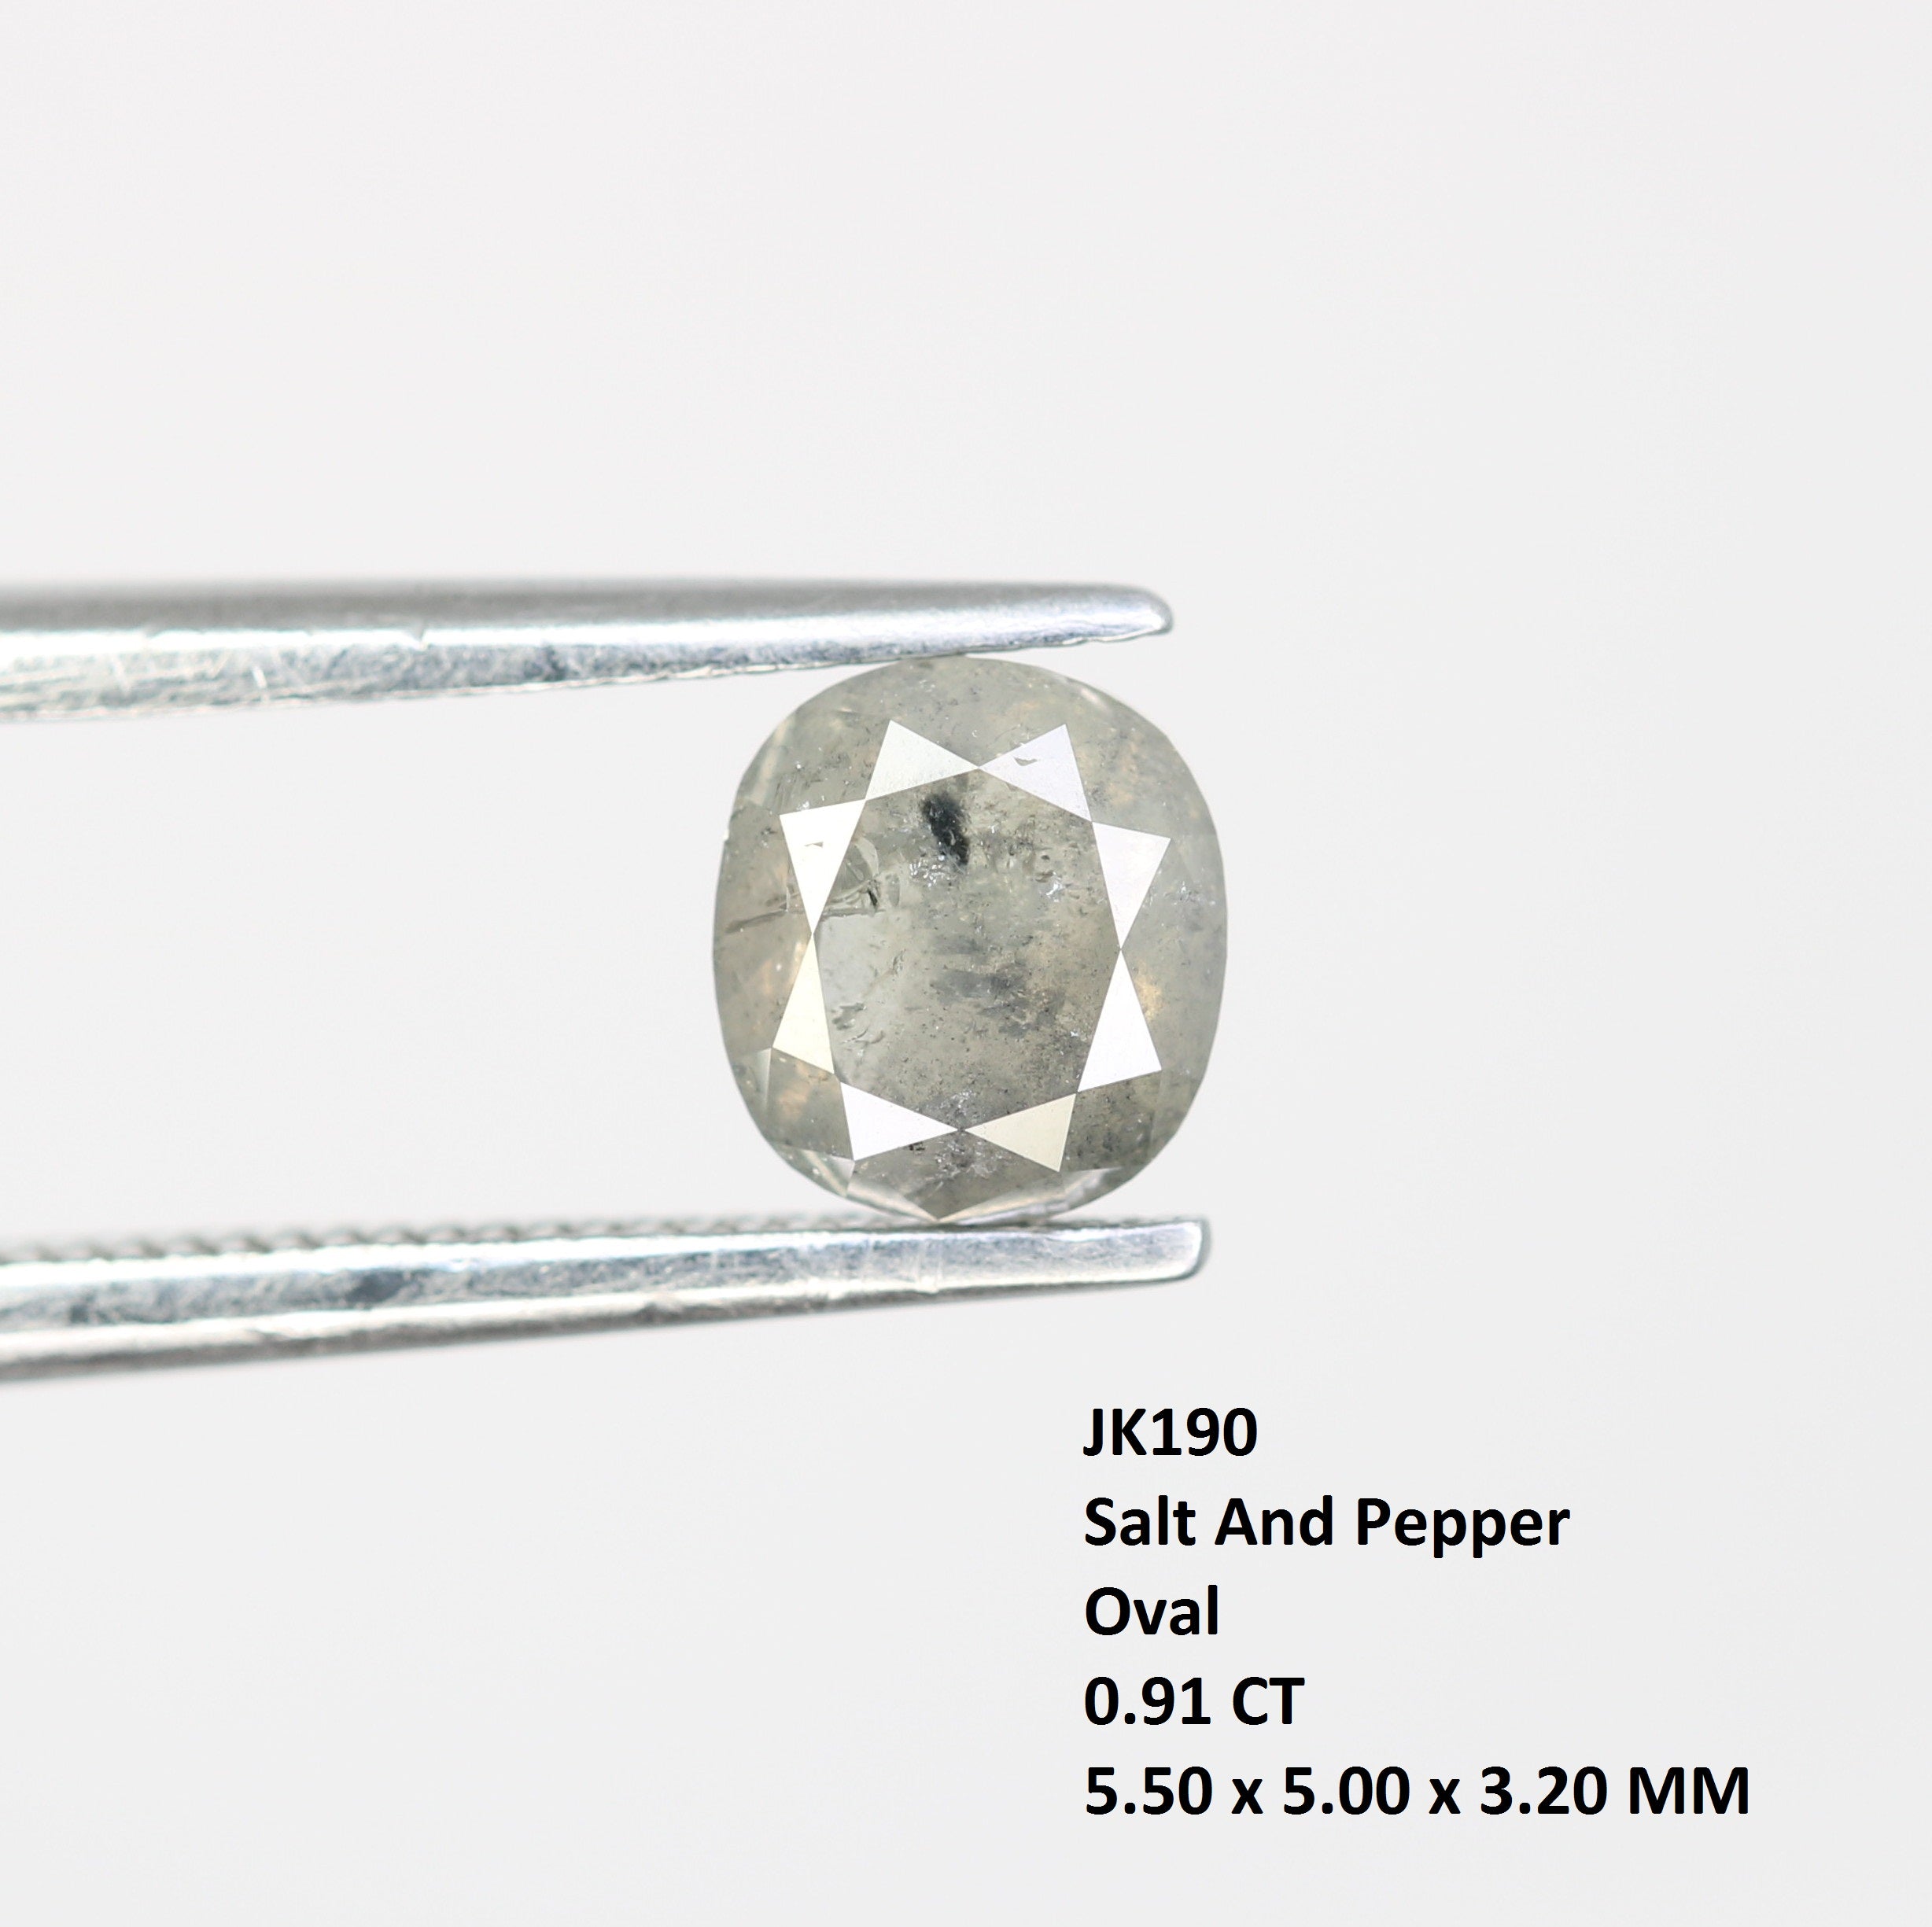 Oval Shape Diamond Ring 0.91 Carat Salt And Pepper Diamond For Engagement Ring